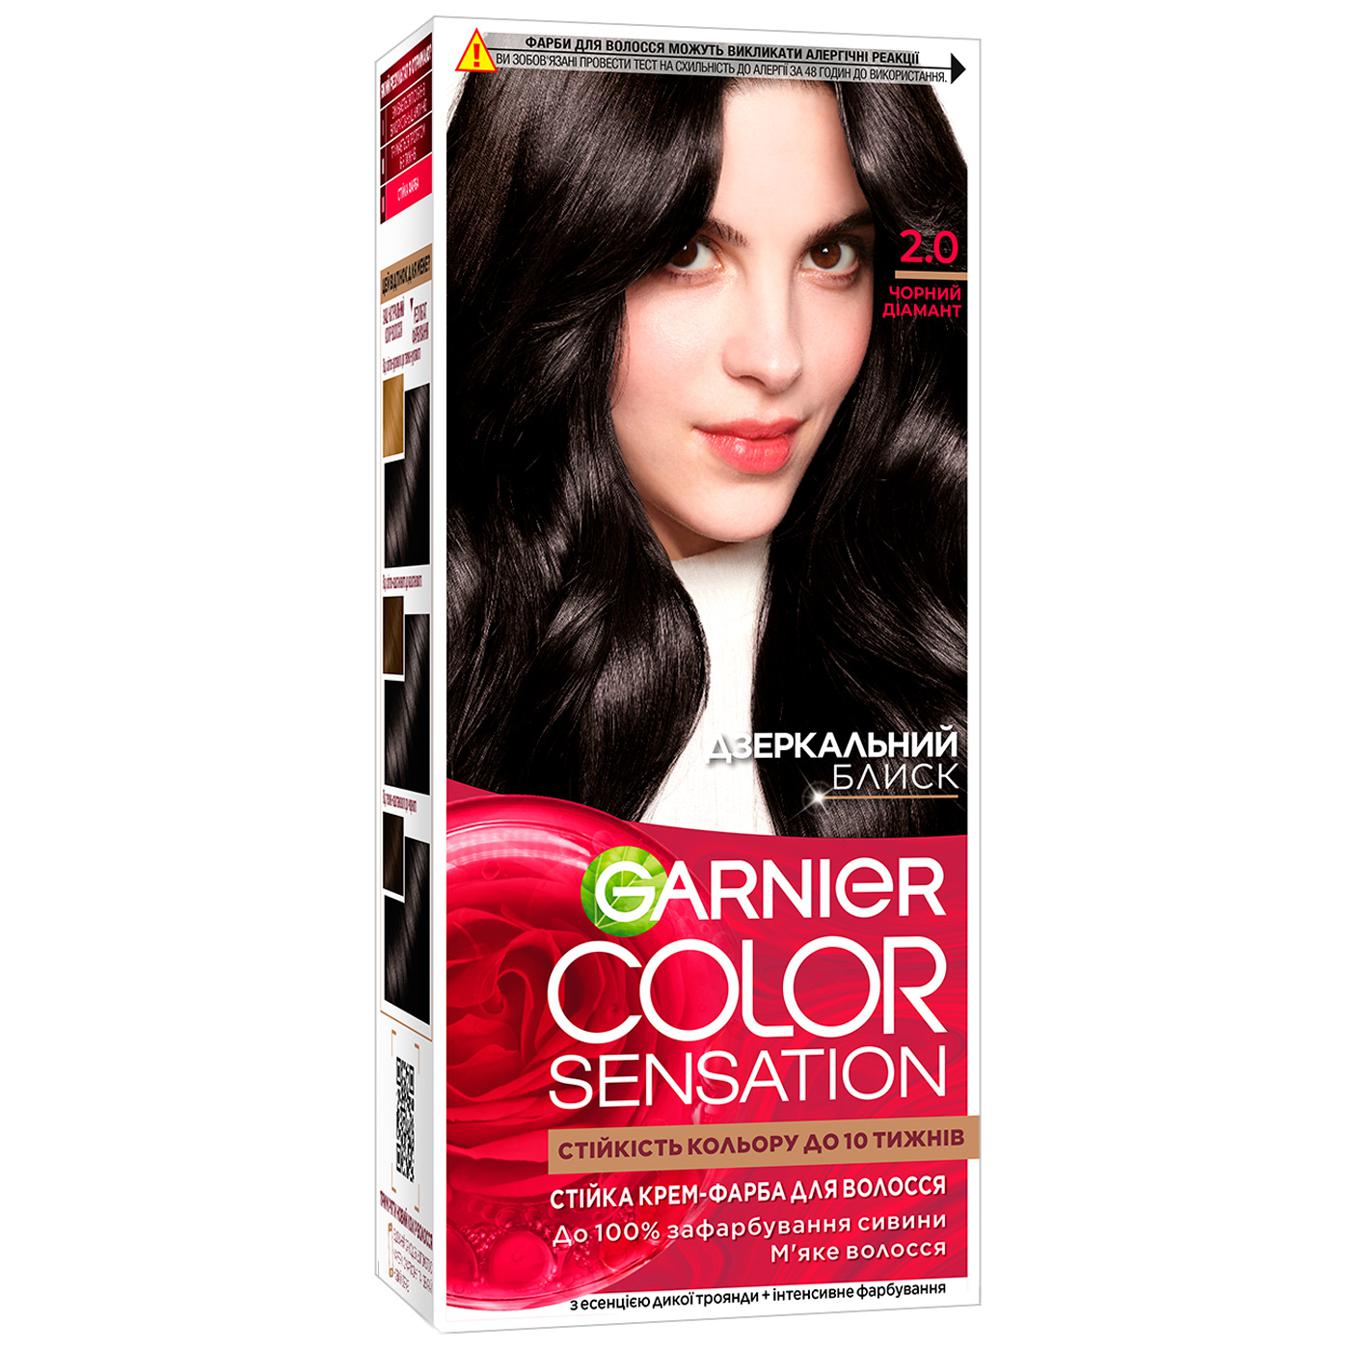 Paint-cream Color Sensation permanent for hair intense shade 2.0